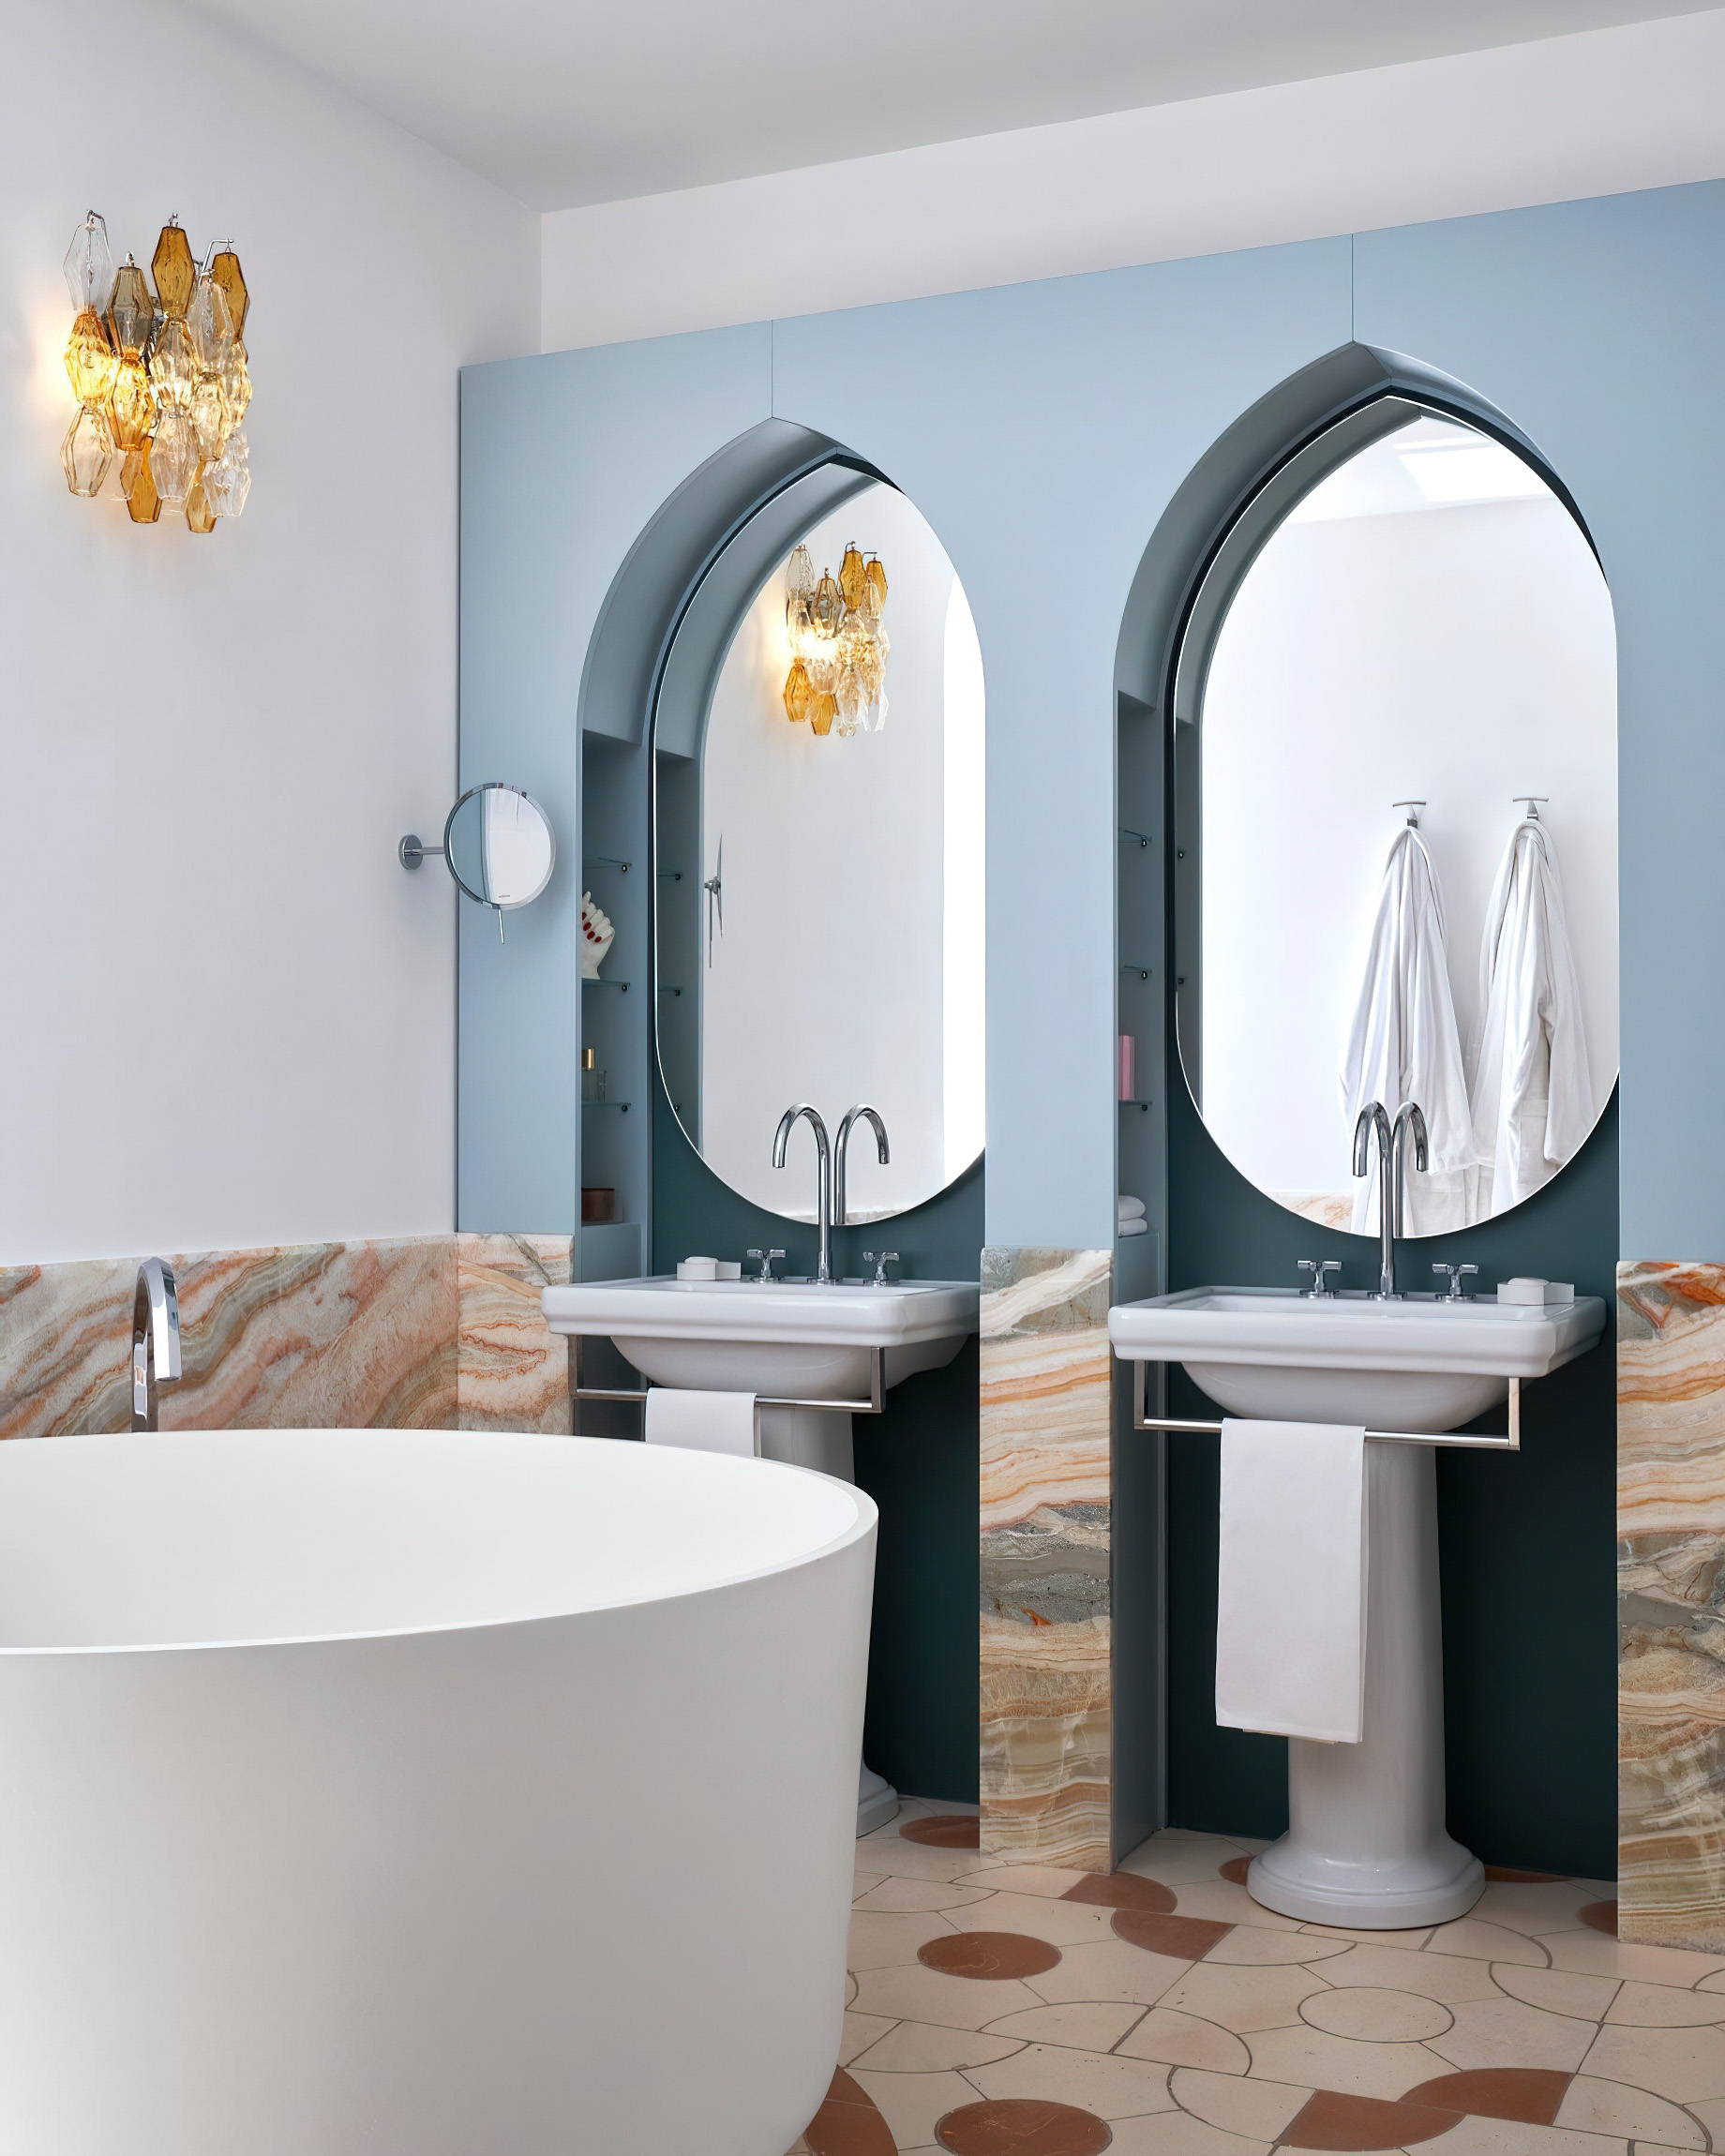 Palazzo Avino Hotel - Amalfi Coast, Ravello, Italy - Guest Bathroom